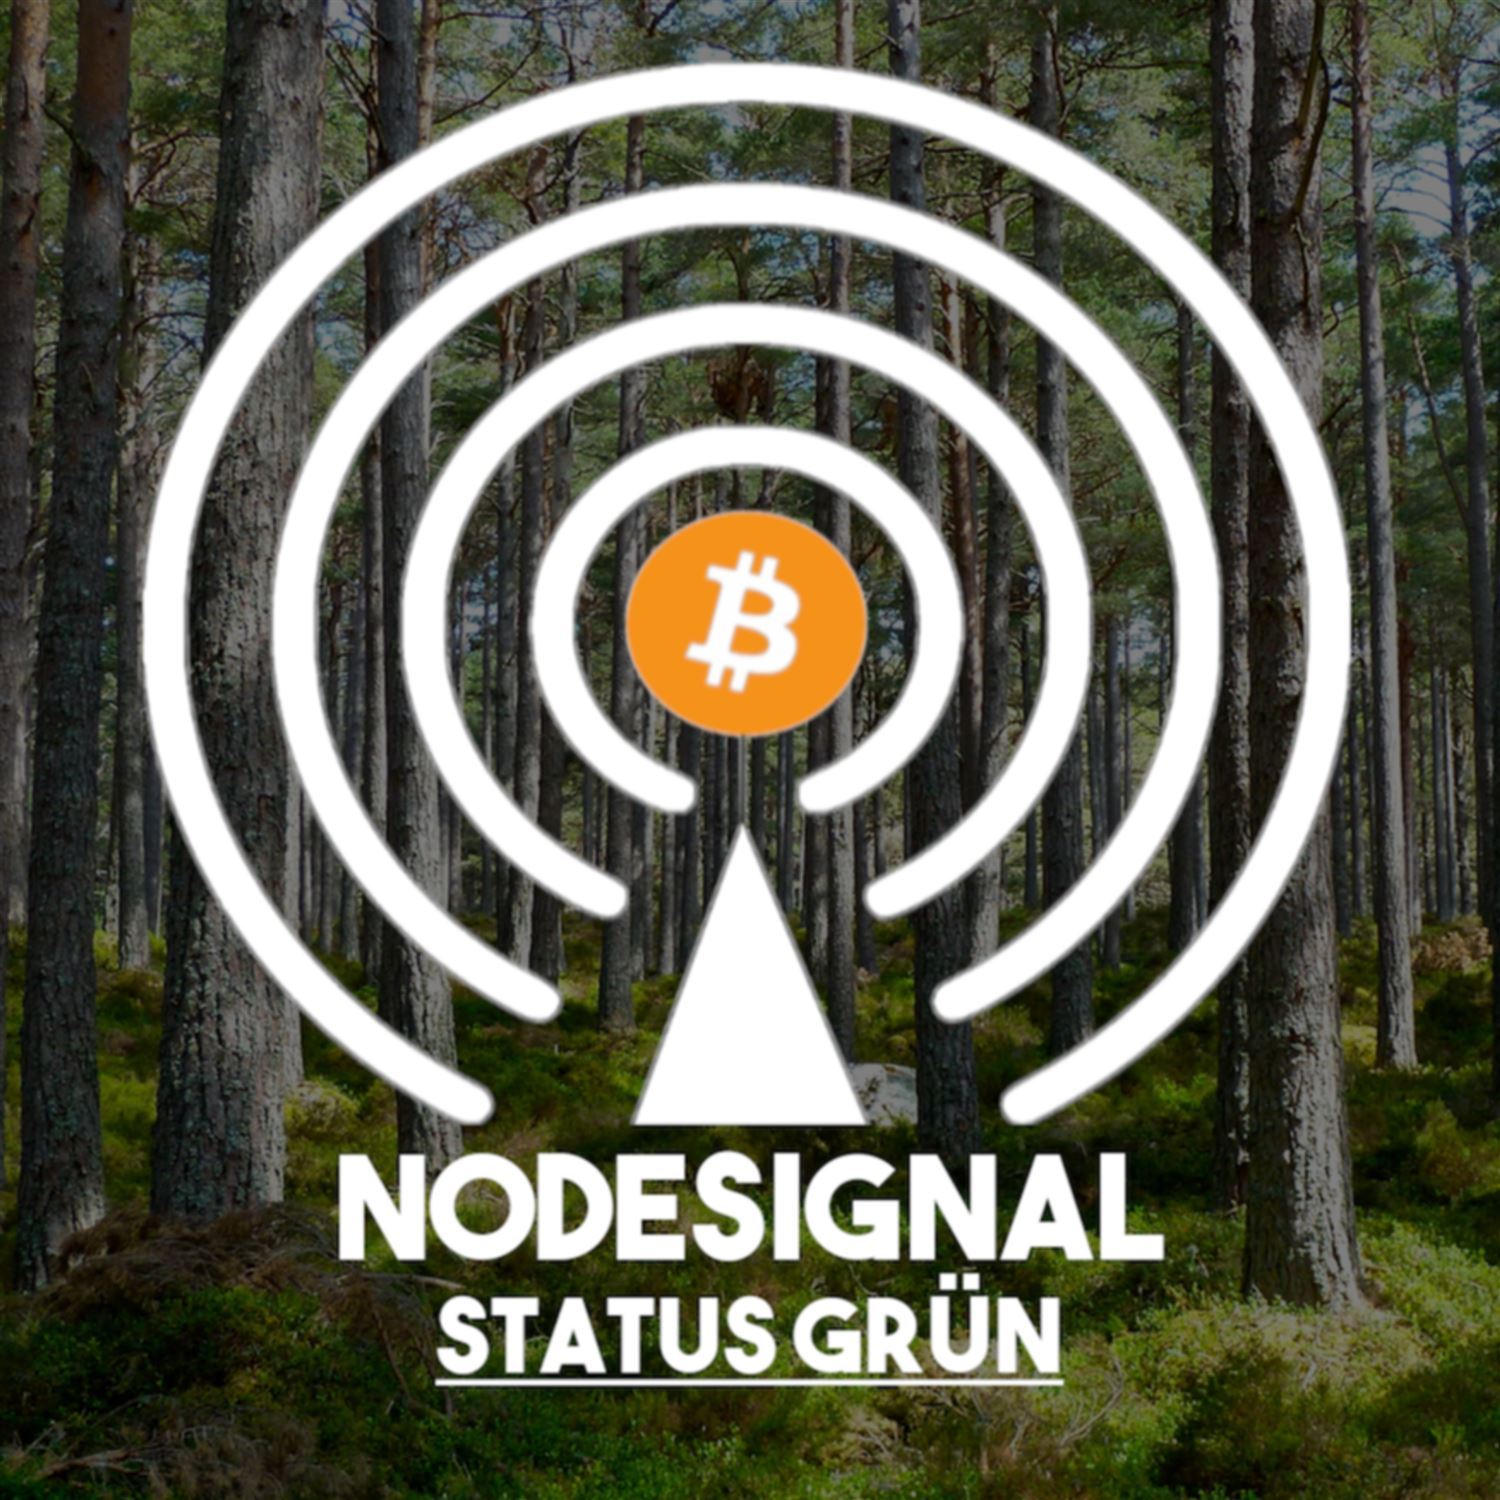 Nodesignal-Status Grün - E04 - Bitcoin ist sozial